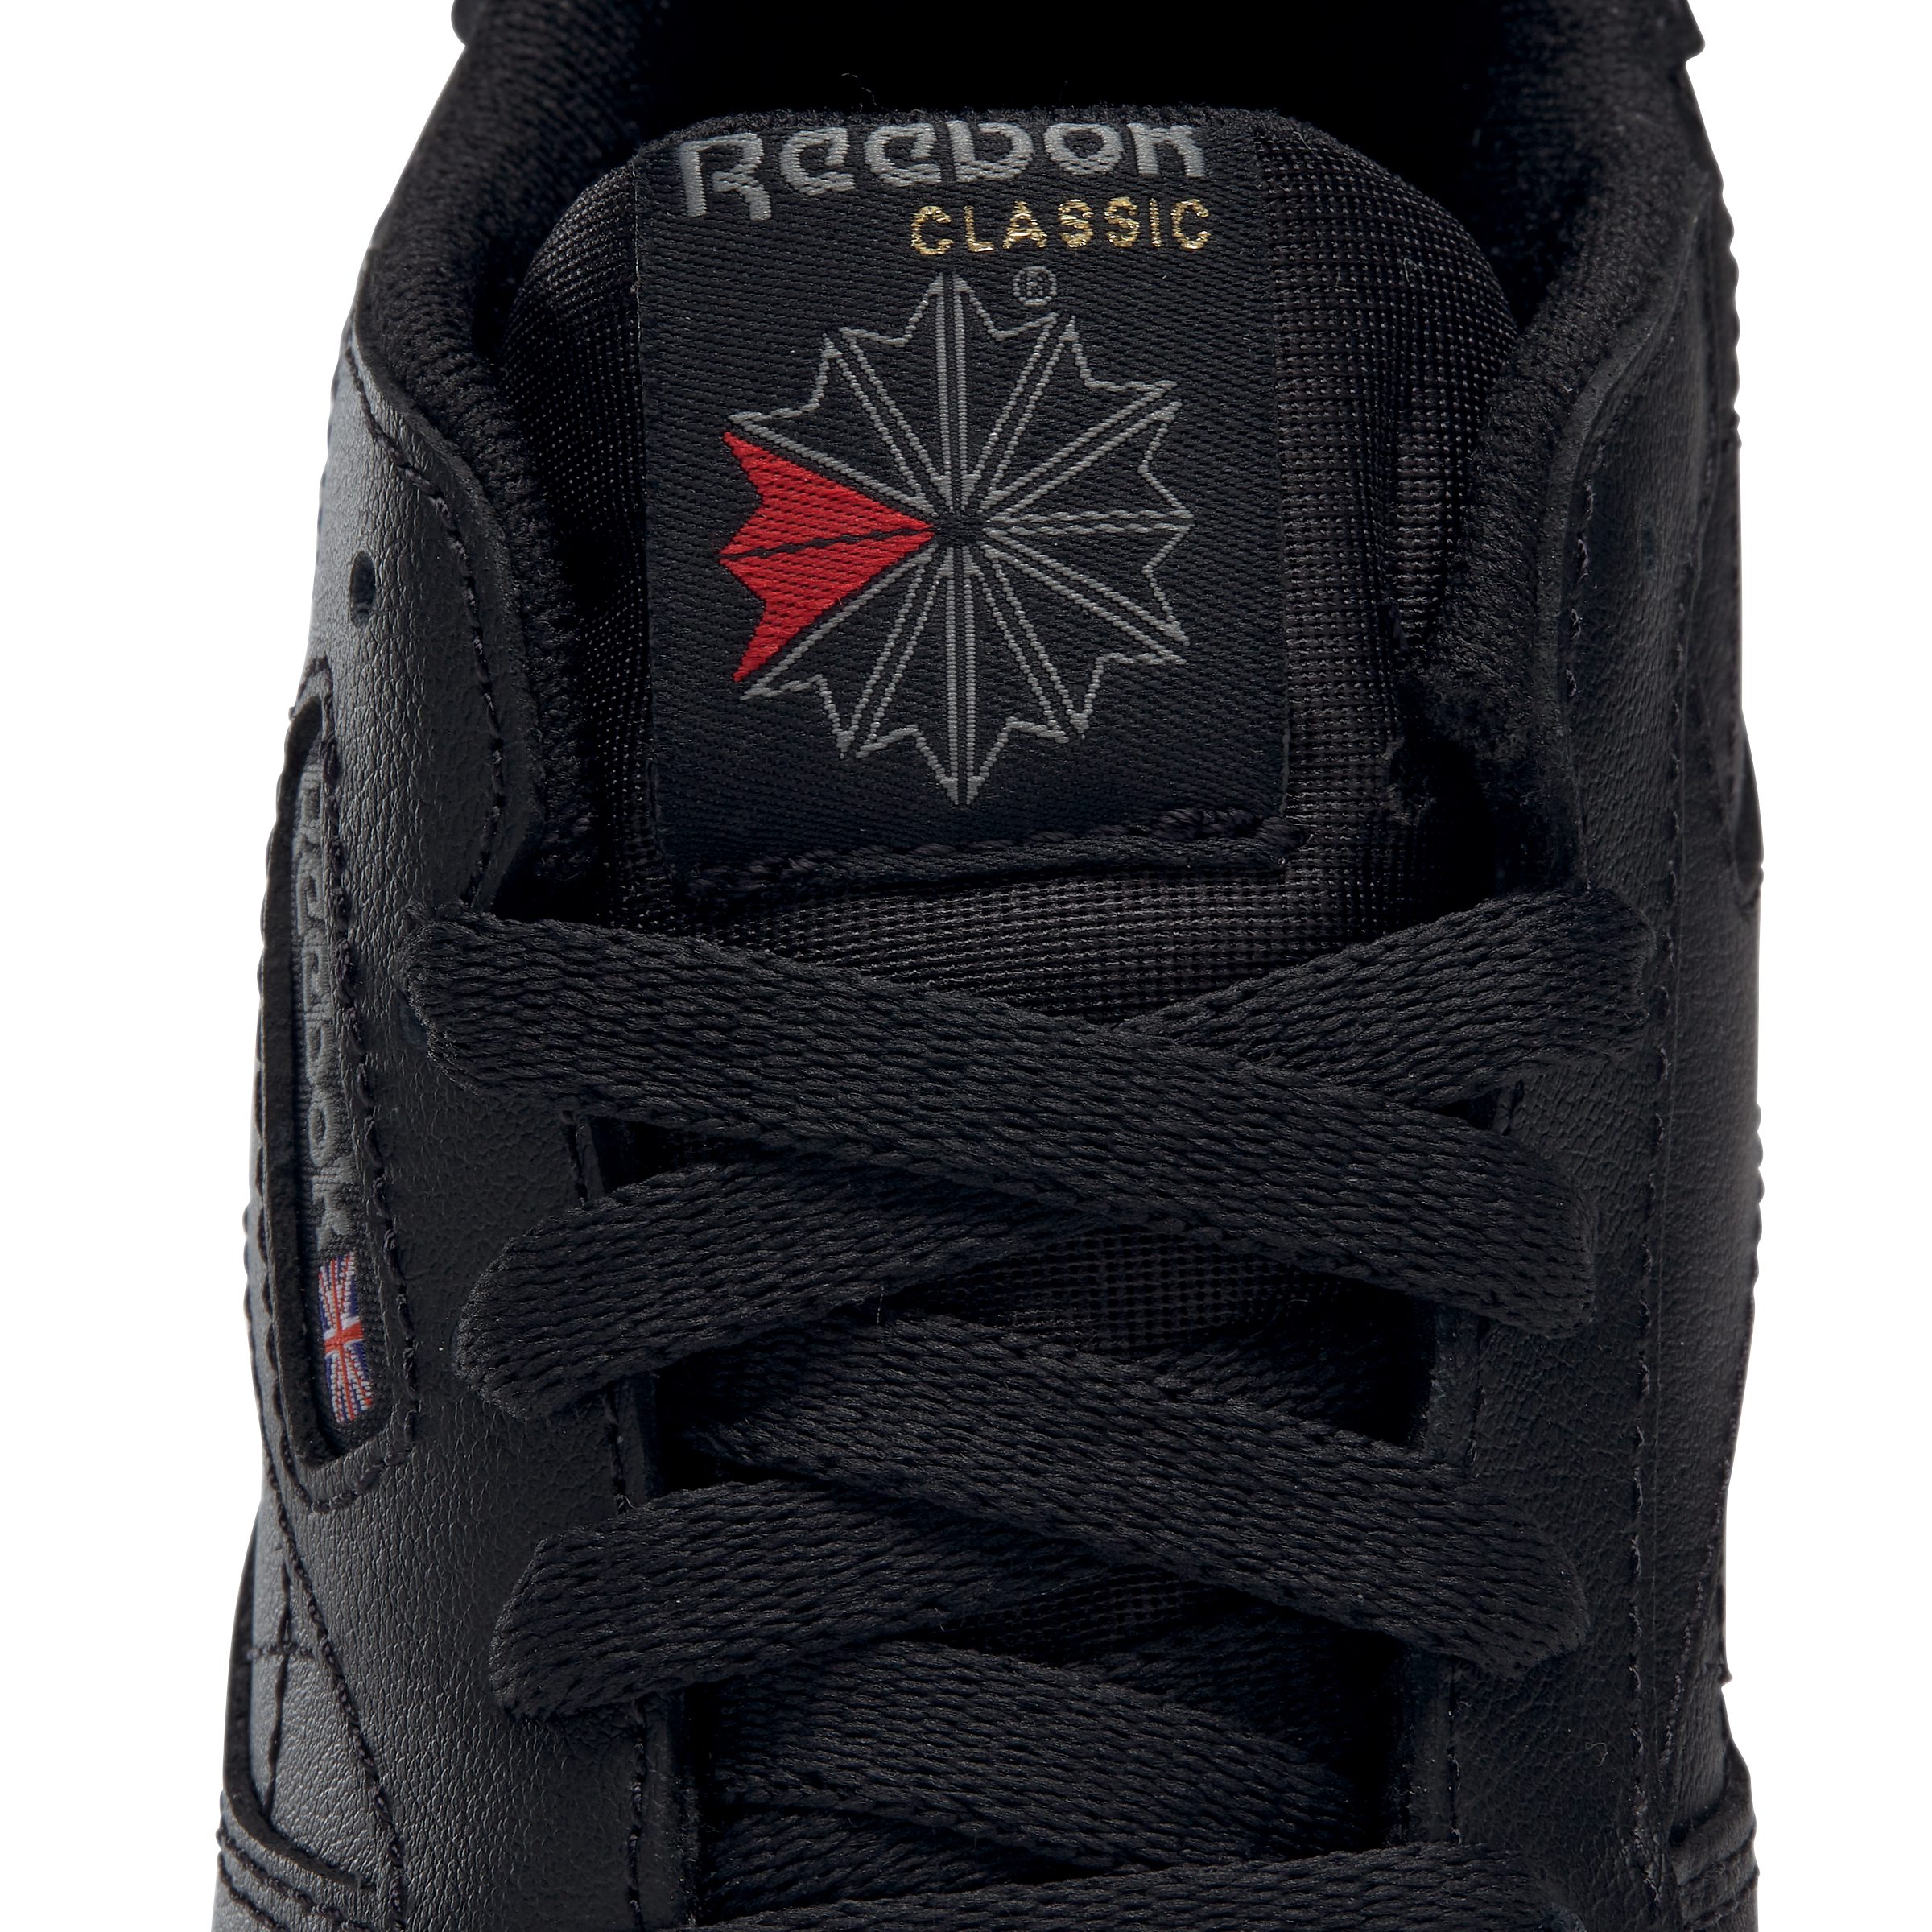 Classic Reebok CLASSIC Sneaker schwarz LEATHER